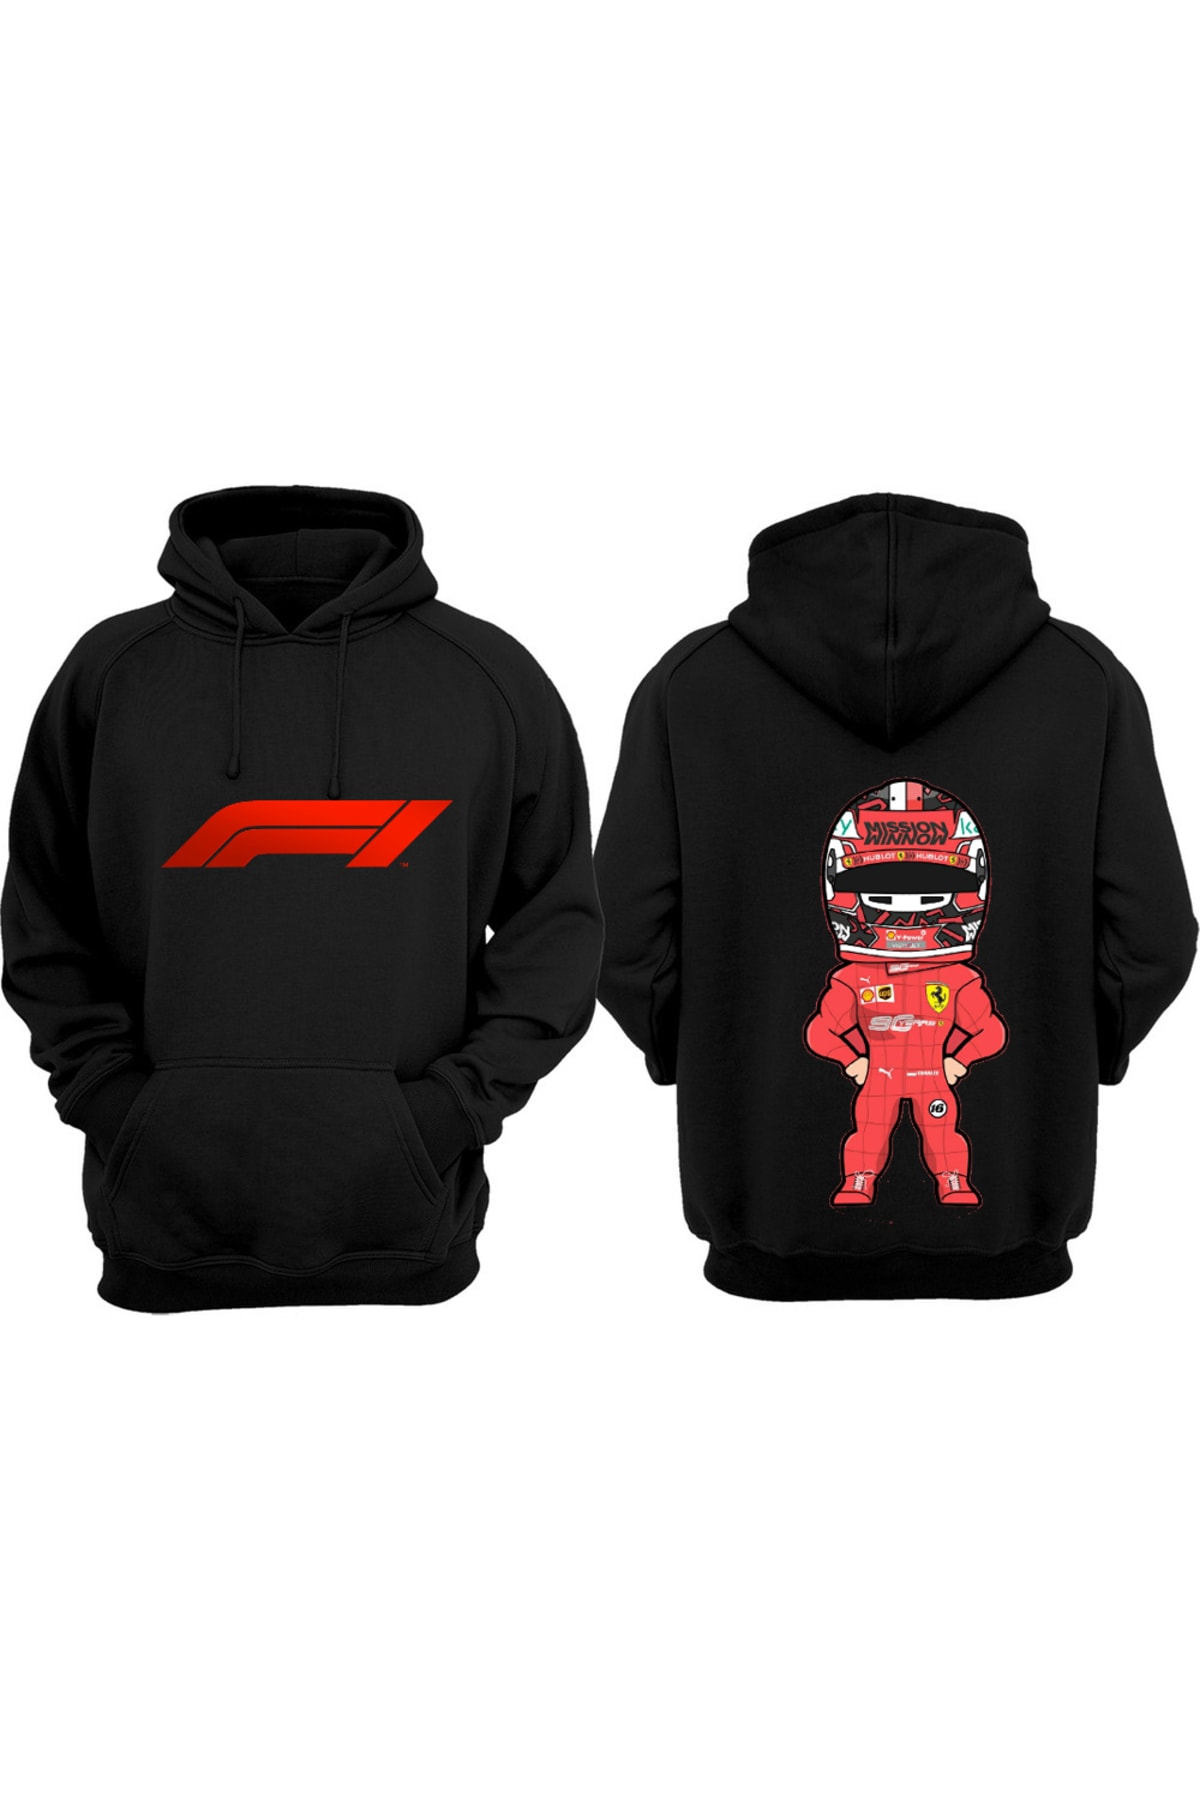 Biy Store F1 Formula Ferrari Yeni Sezon Unisex Hoodie Sweatshirt